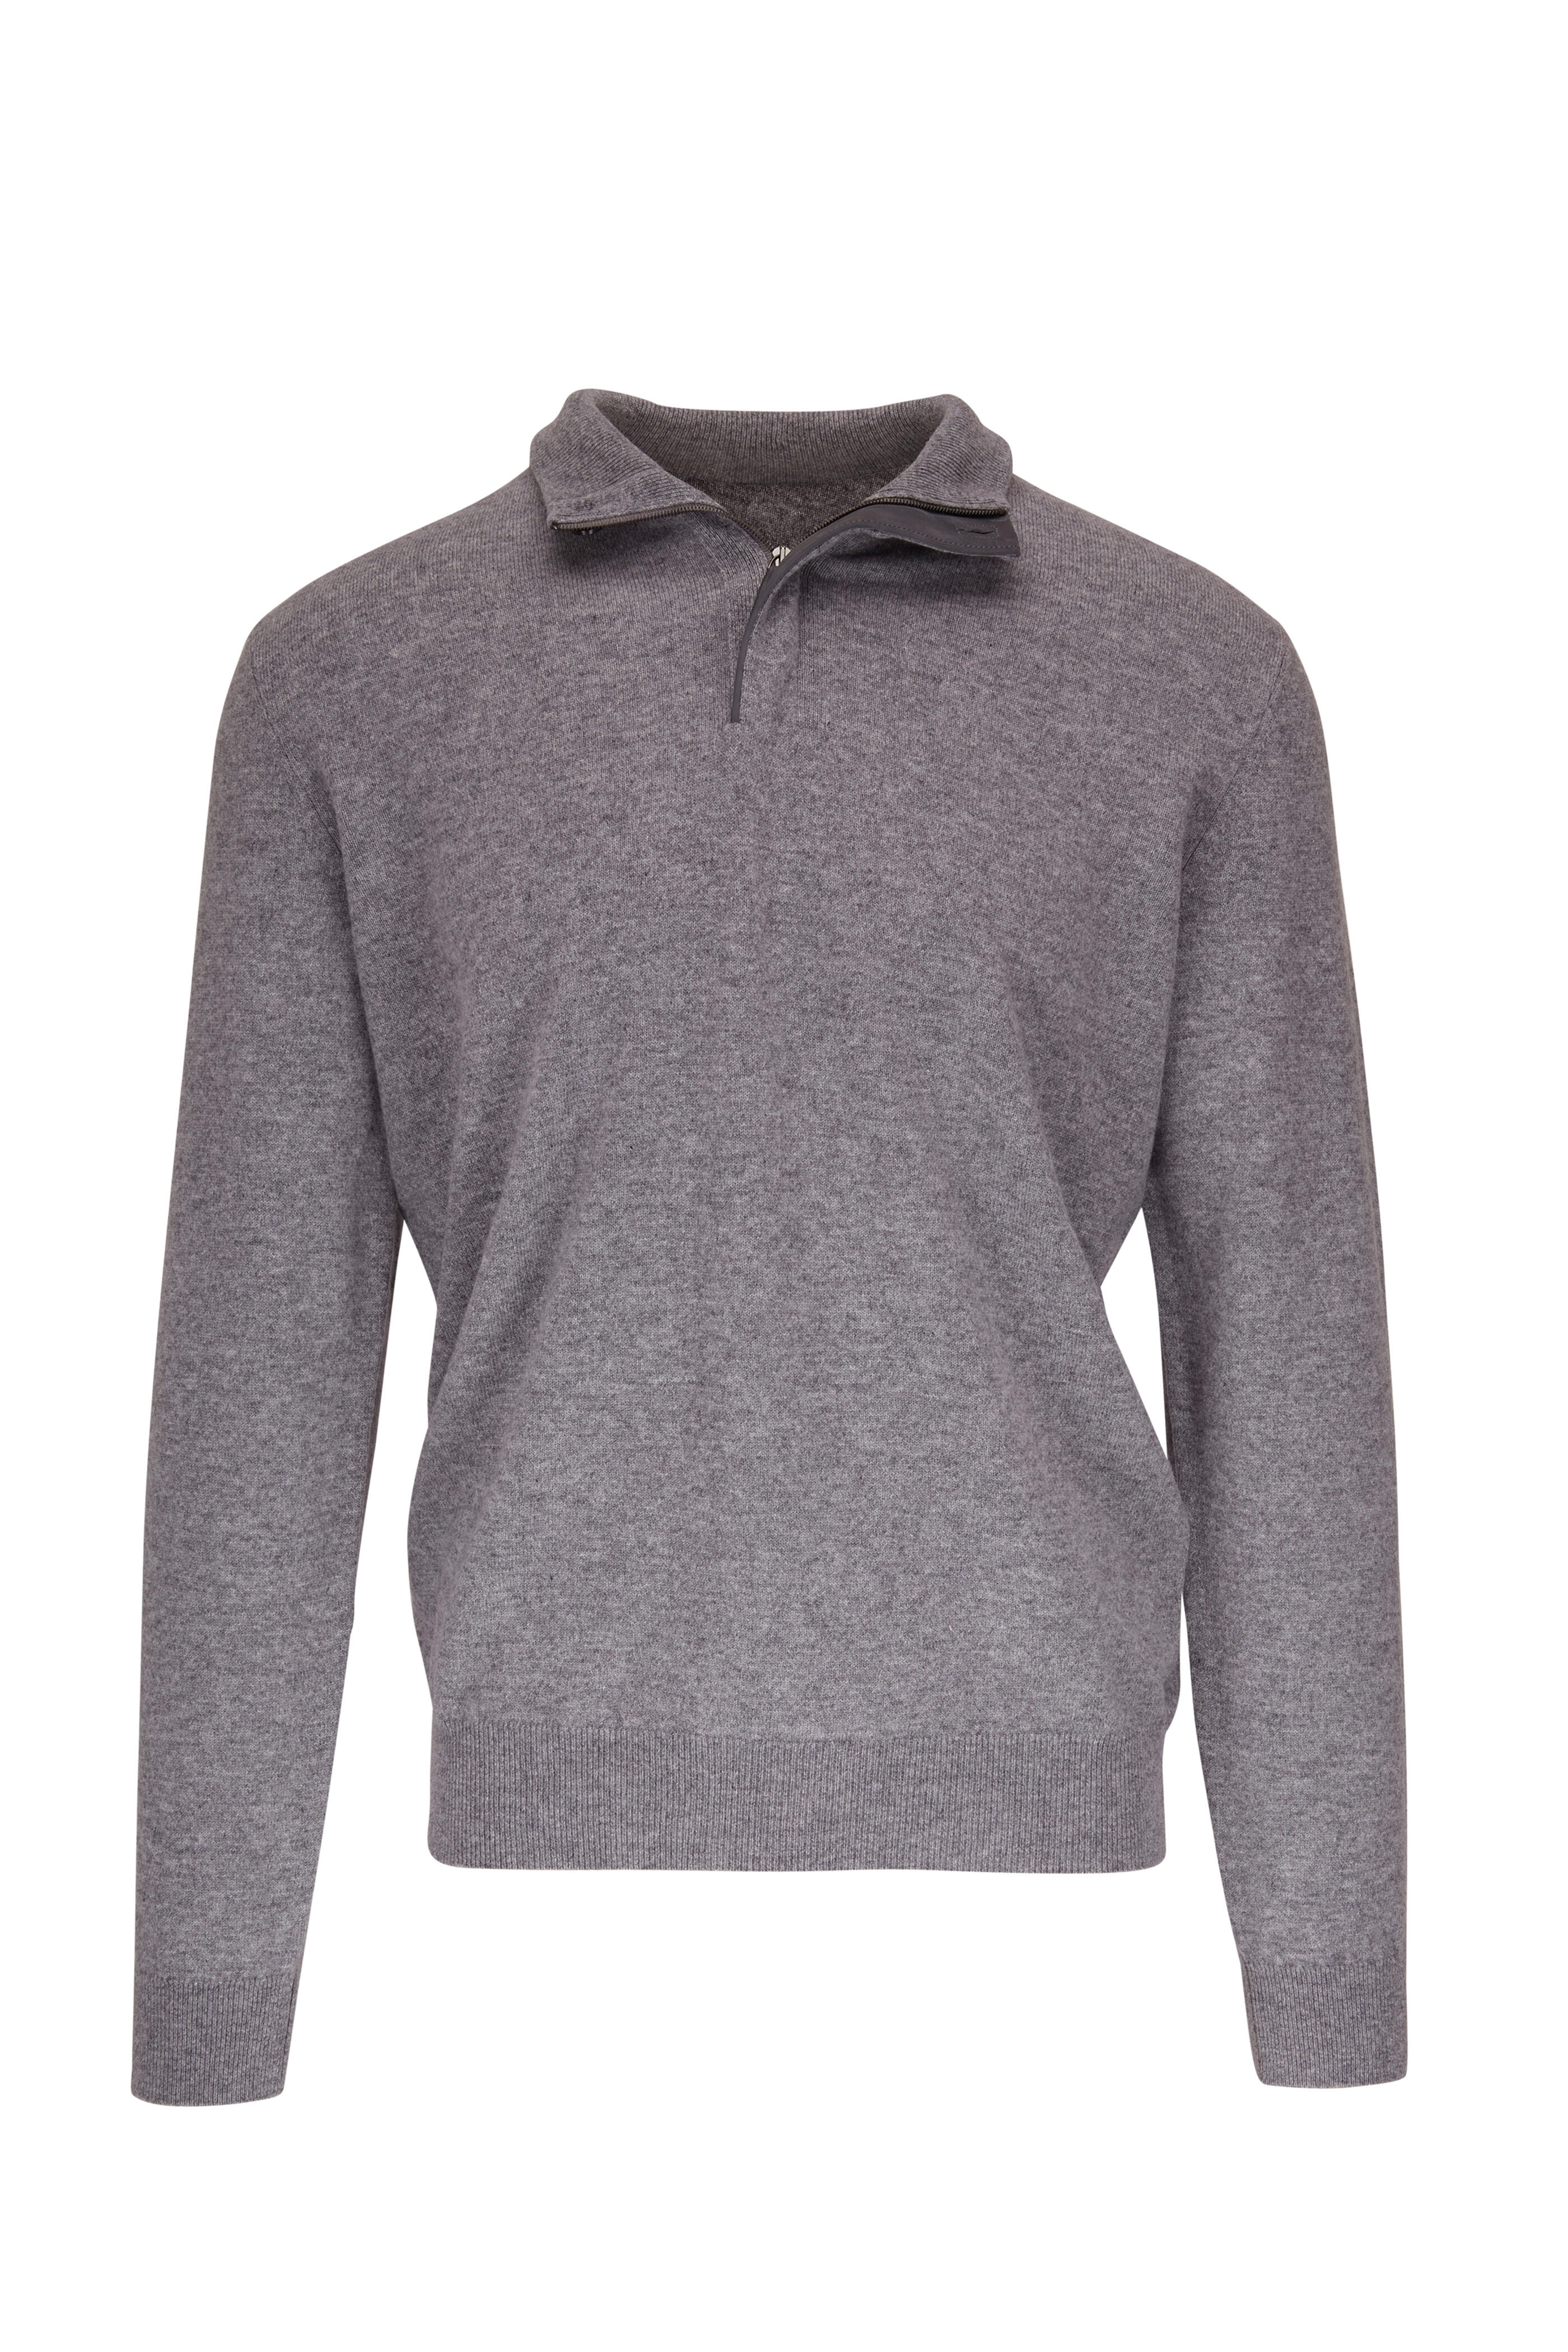 Zegna - Gray Oasi Cashmere Quarter Zip Pullover | Mitchell Stores